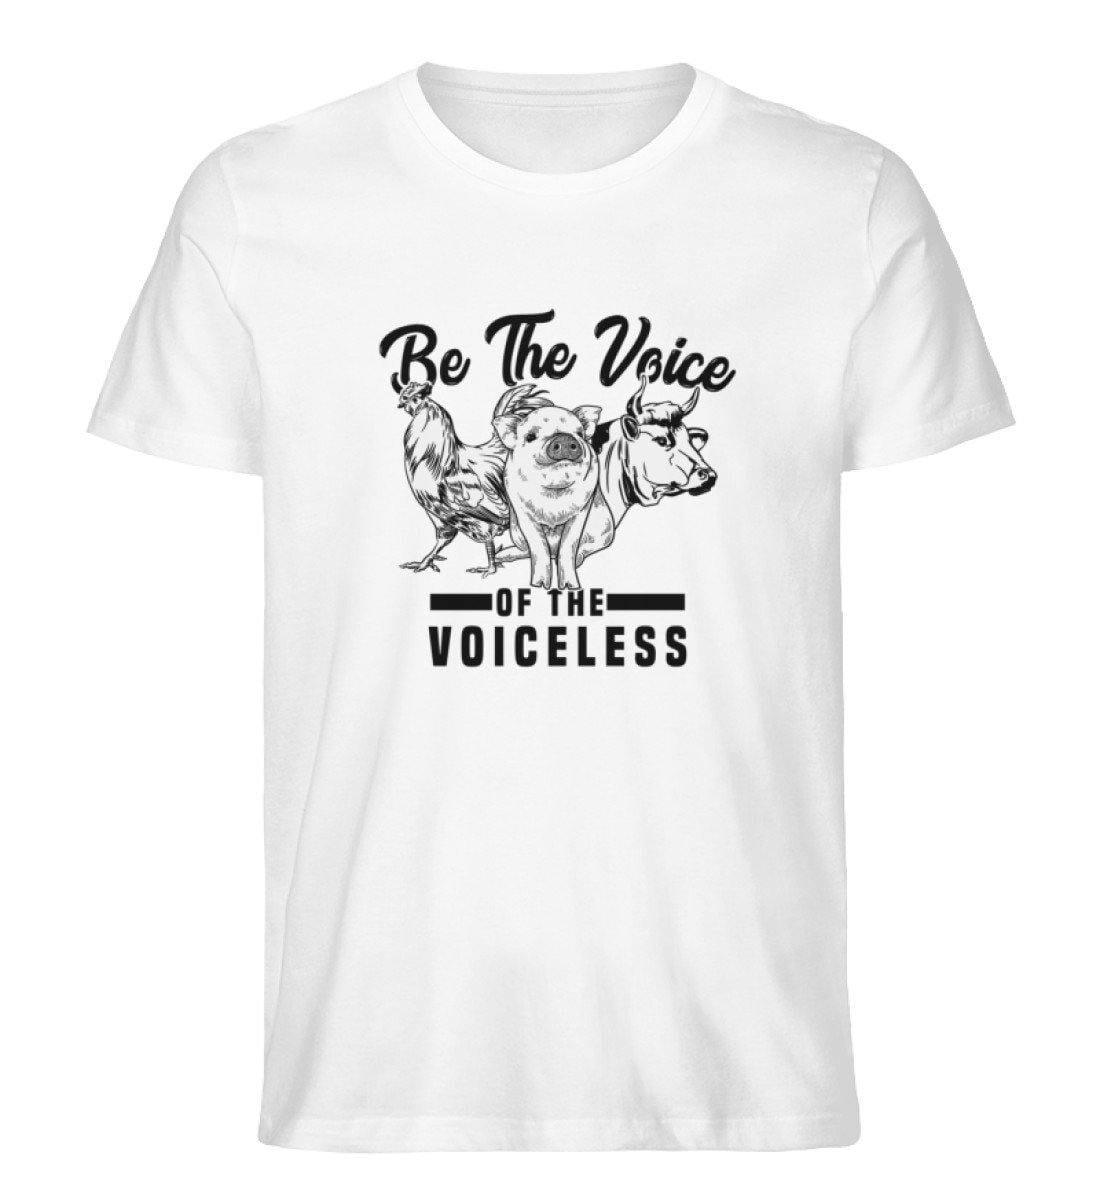 Be The Voice of the voiceless - Unisex Organic Shirt - Team Vegan © vegan t shirt